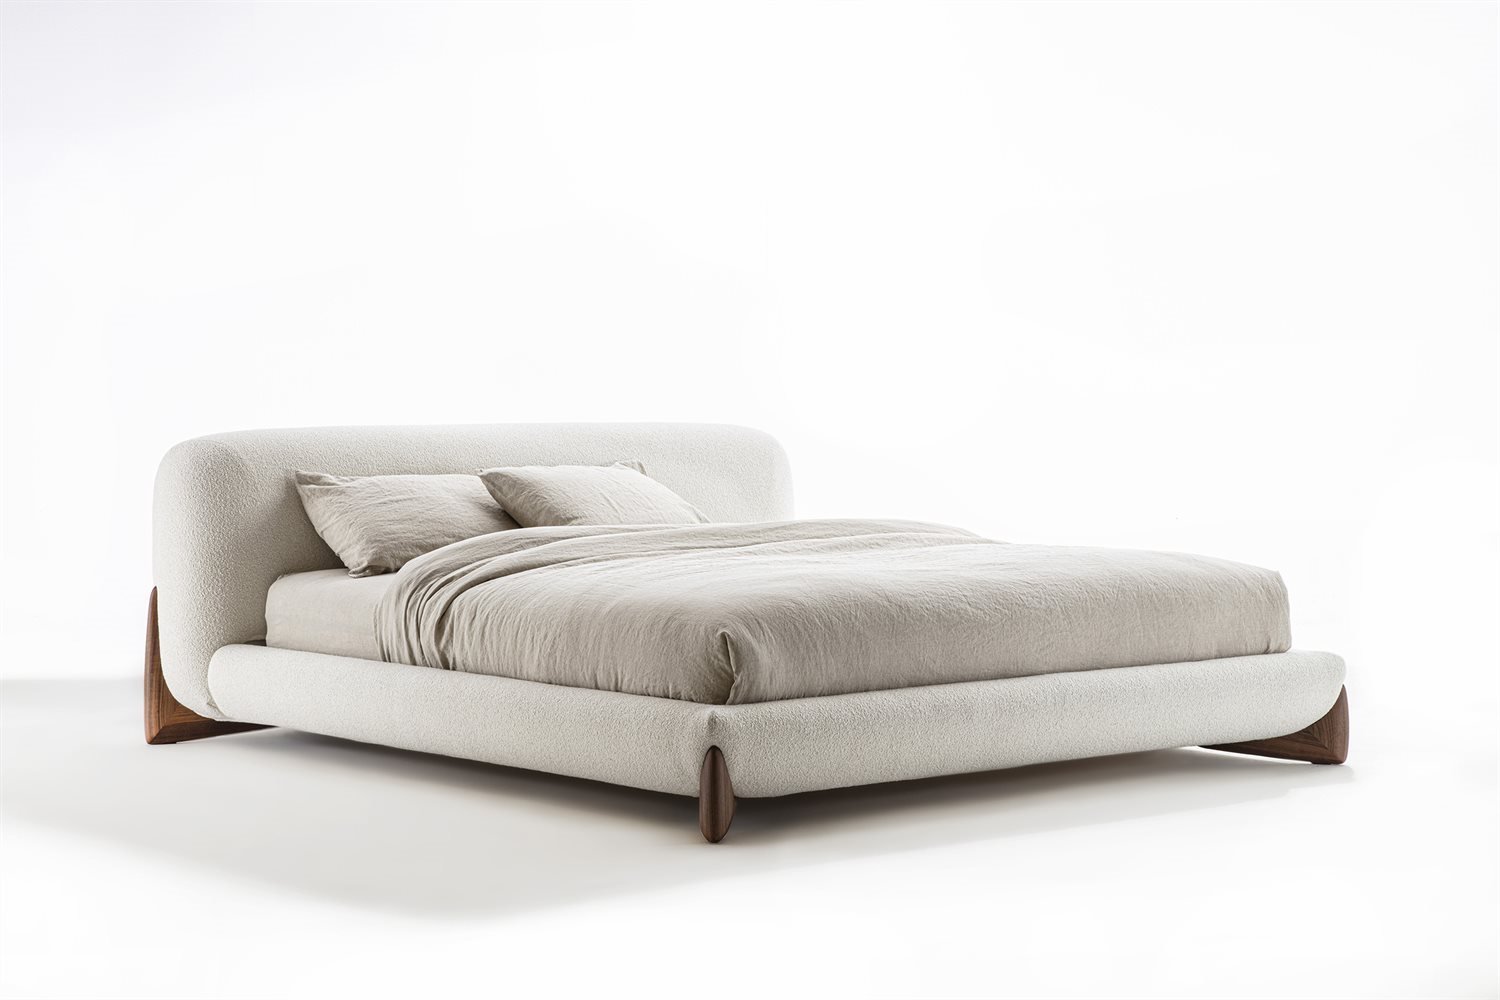 Softbay Bed from Porada, designed by G. Vigano